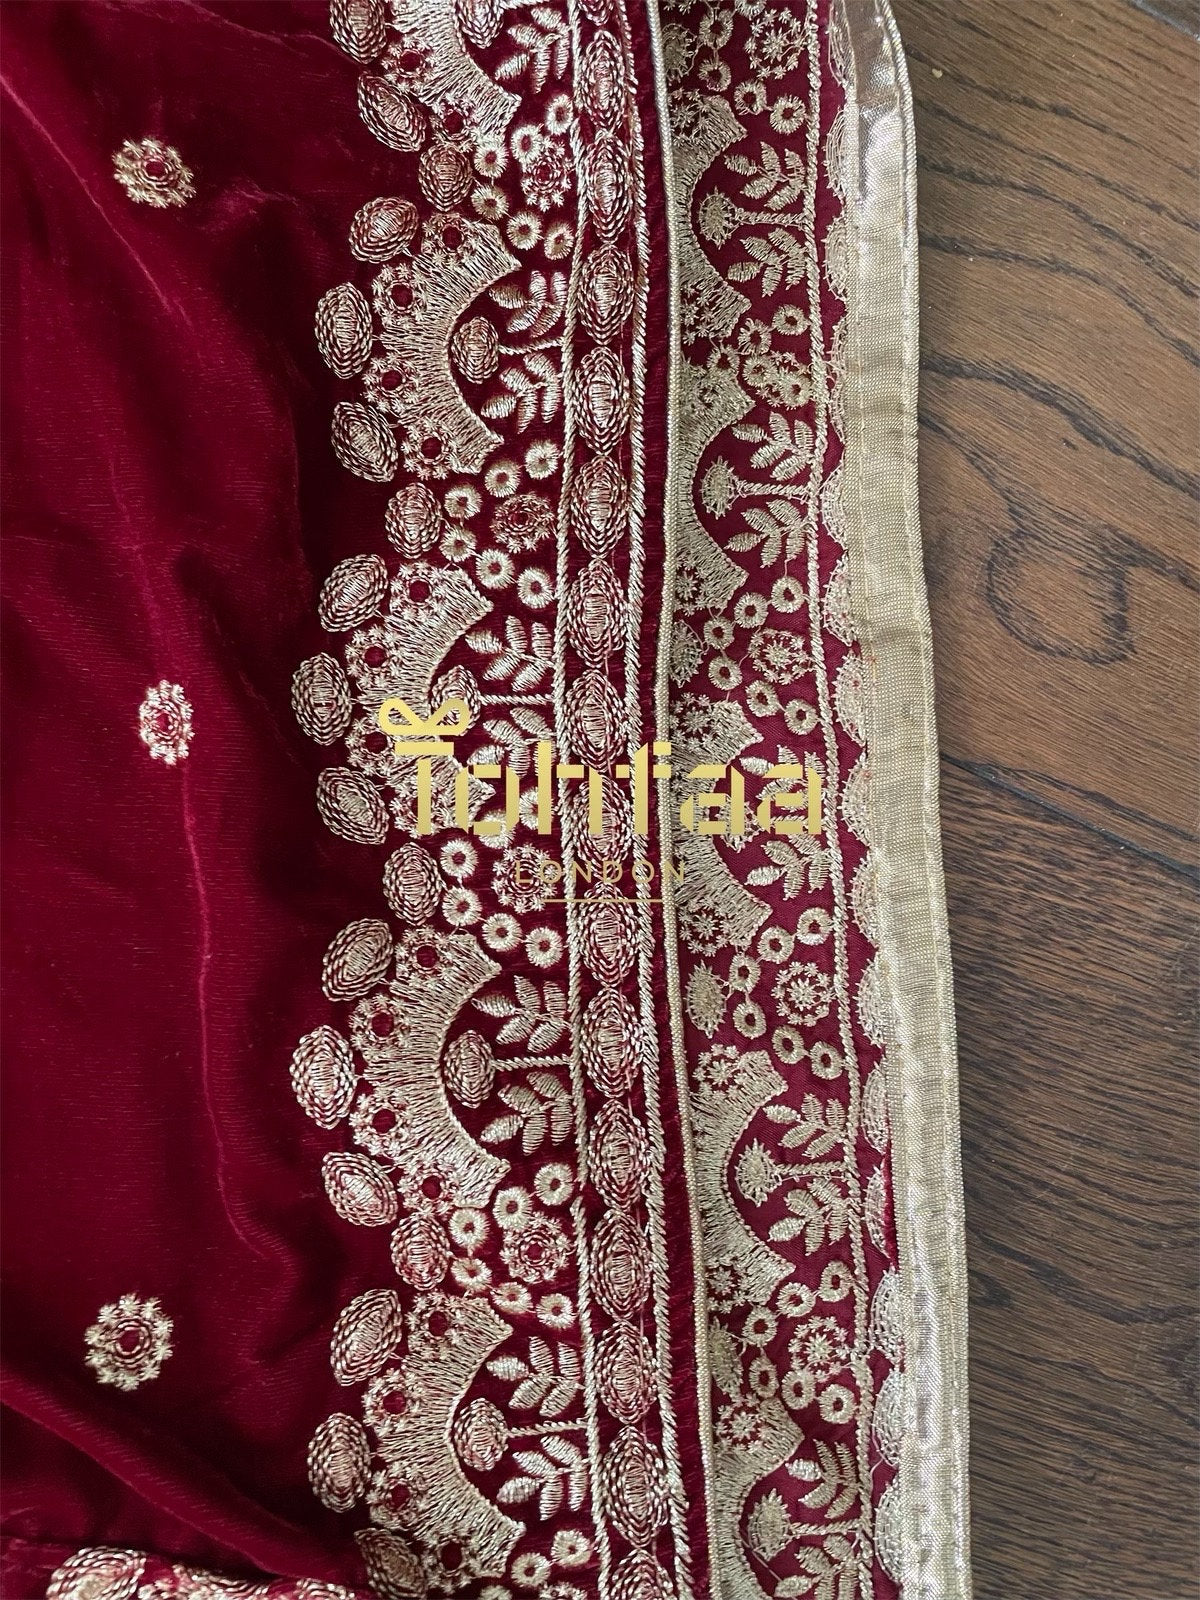 Maroon Colour Velvet Embroidered Shawl Chaddar Duppattas for Winters Weddings dressing update Salwar Kameez Lehengas Kurtis